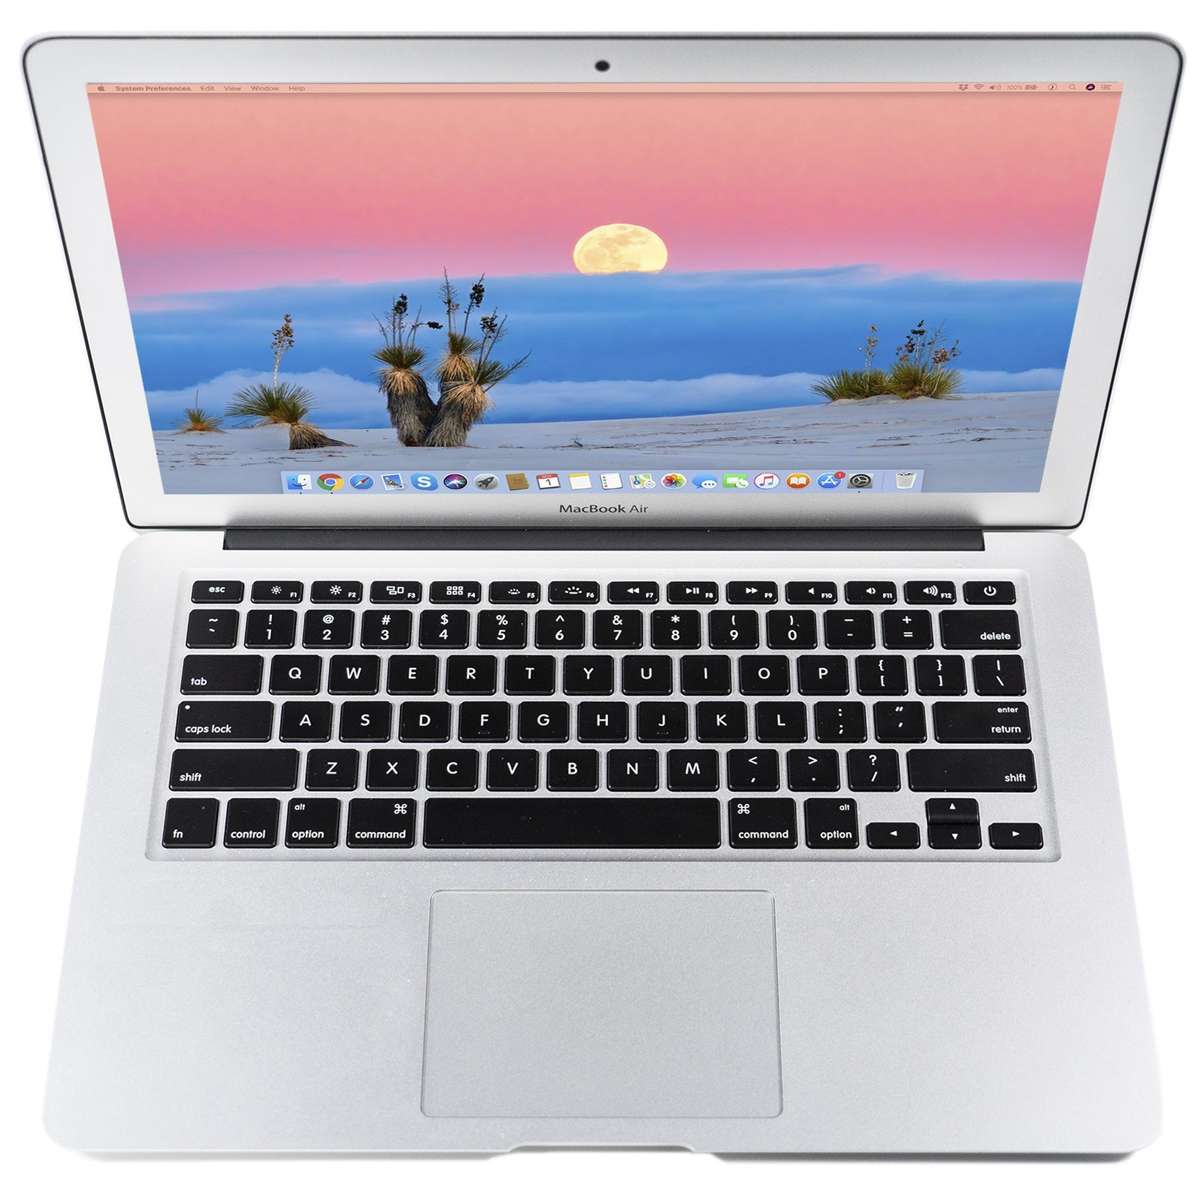 MacBook Air 11インチ Mid 2013 MD711J/A(Core-i5/4GB/128GB)」 Core